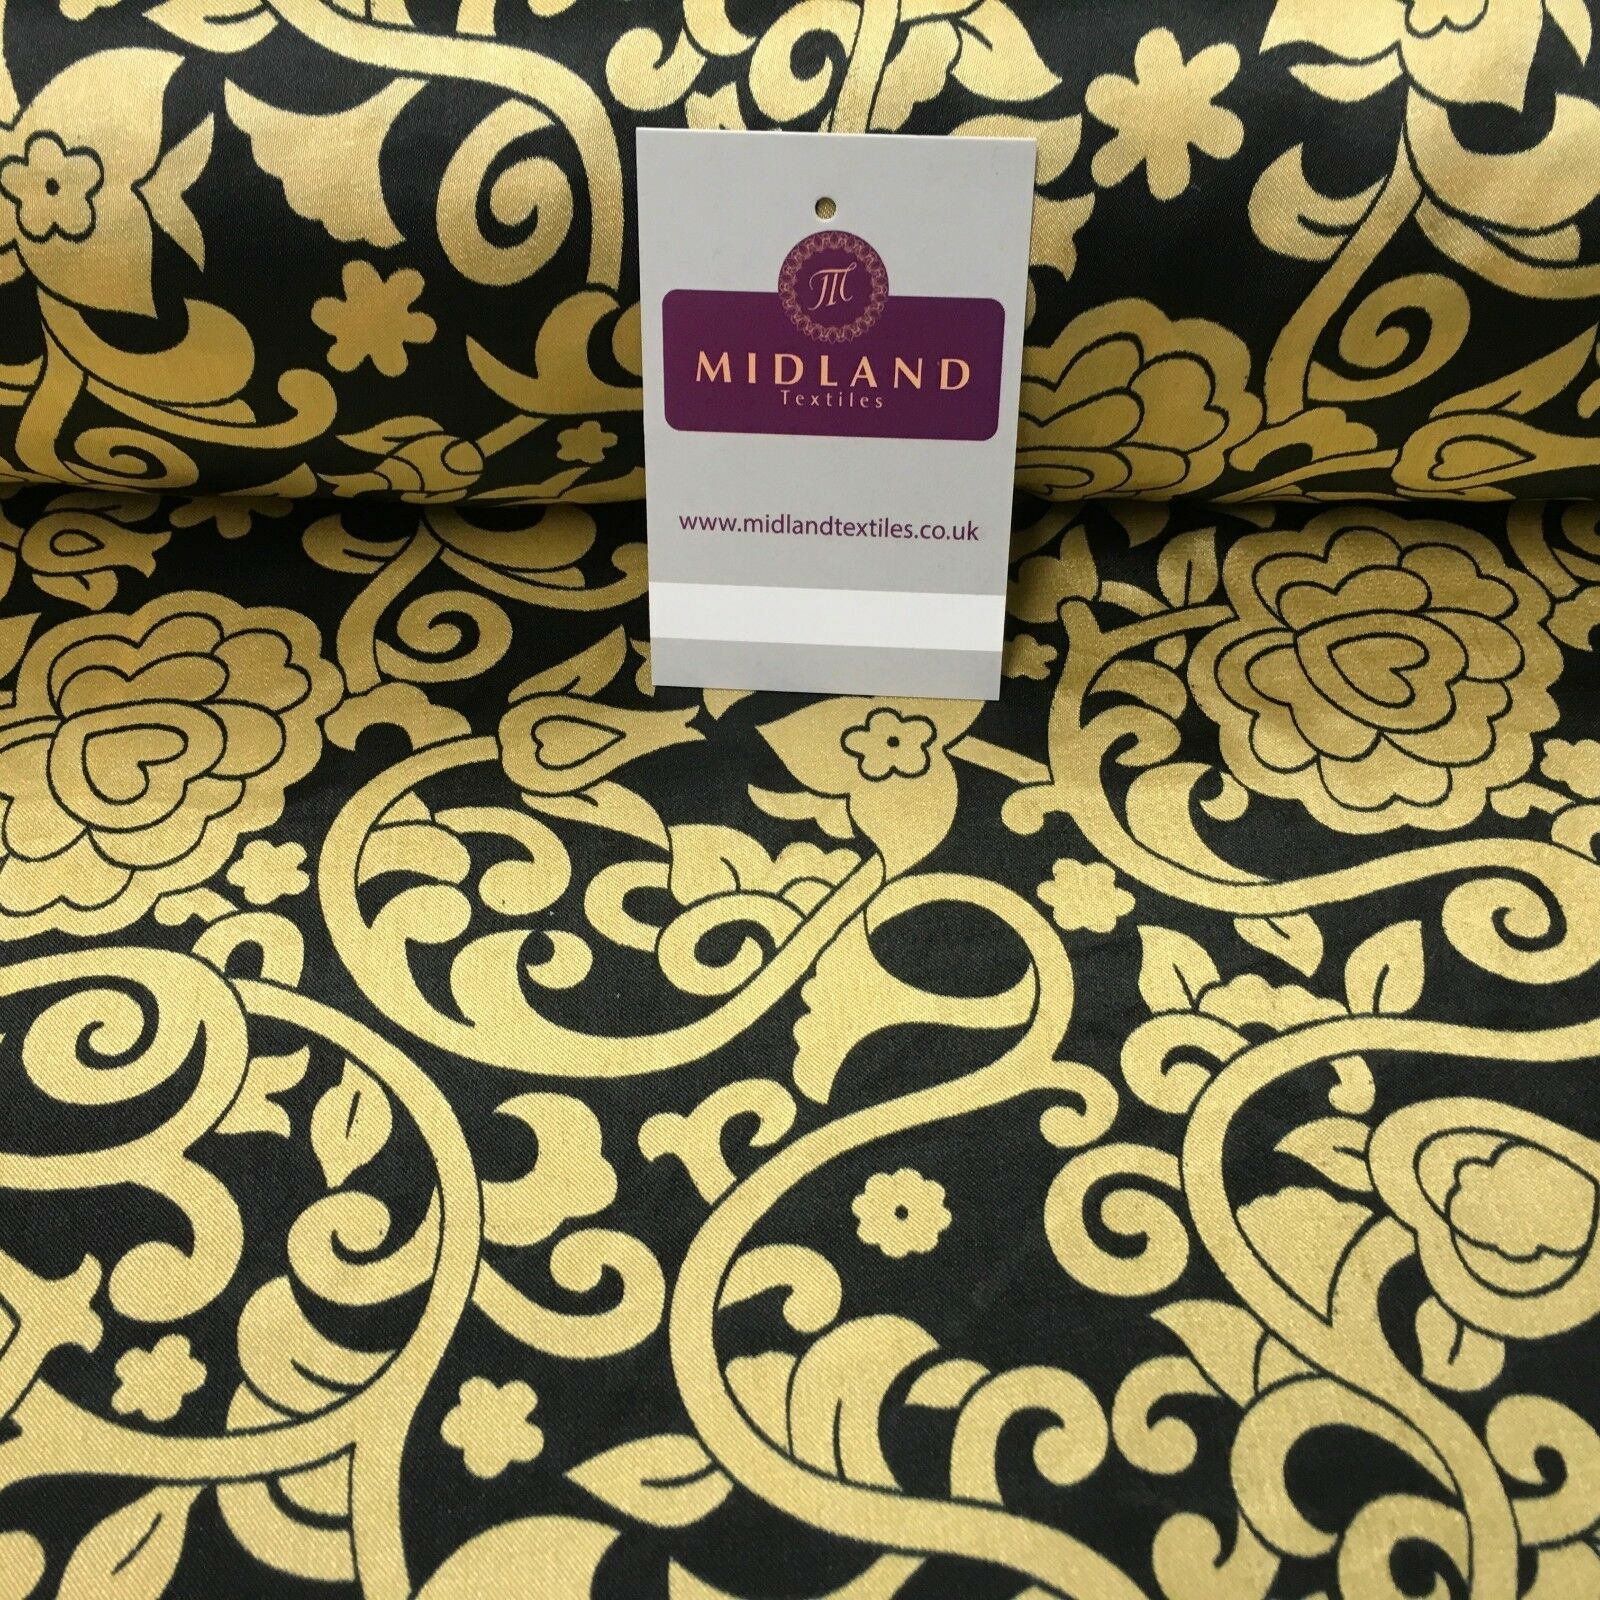 Black & Gold Floral Printed Satin Silky Dress fabric 55" Wide MA1026 Mtex